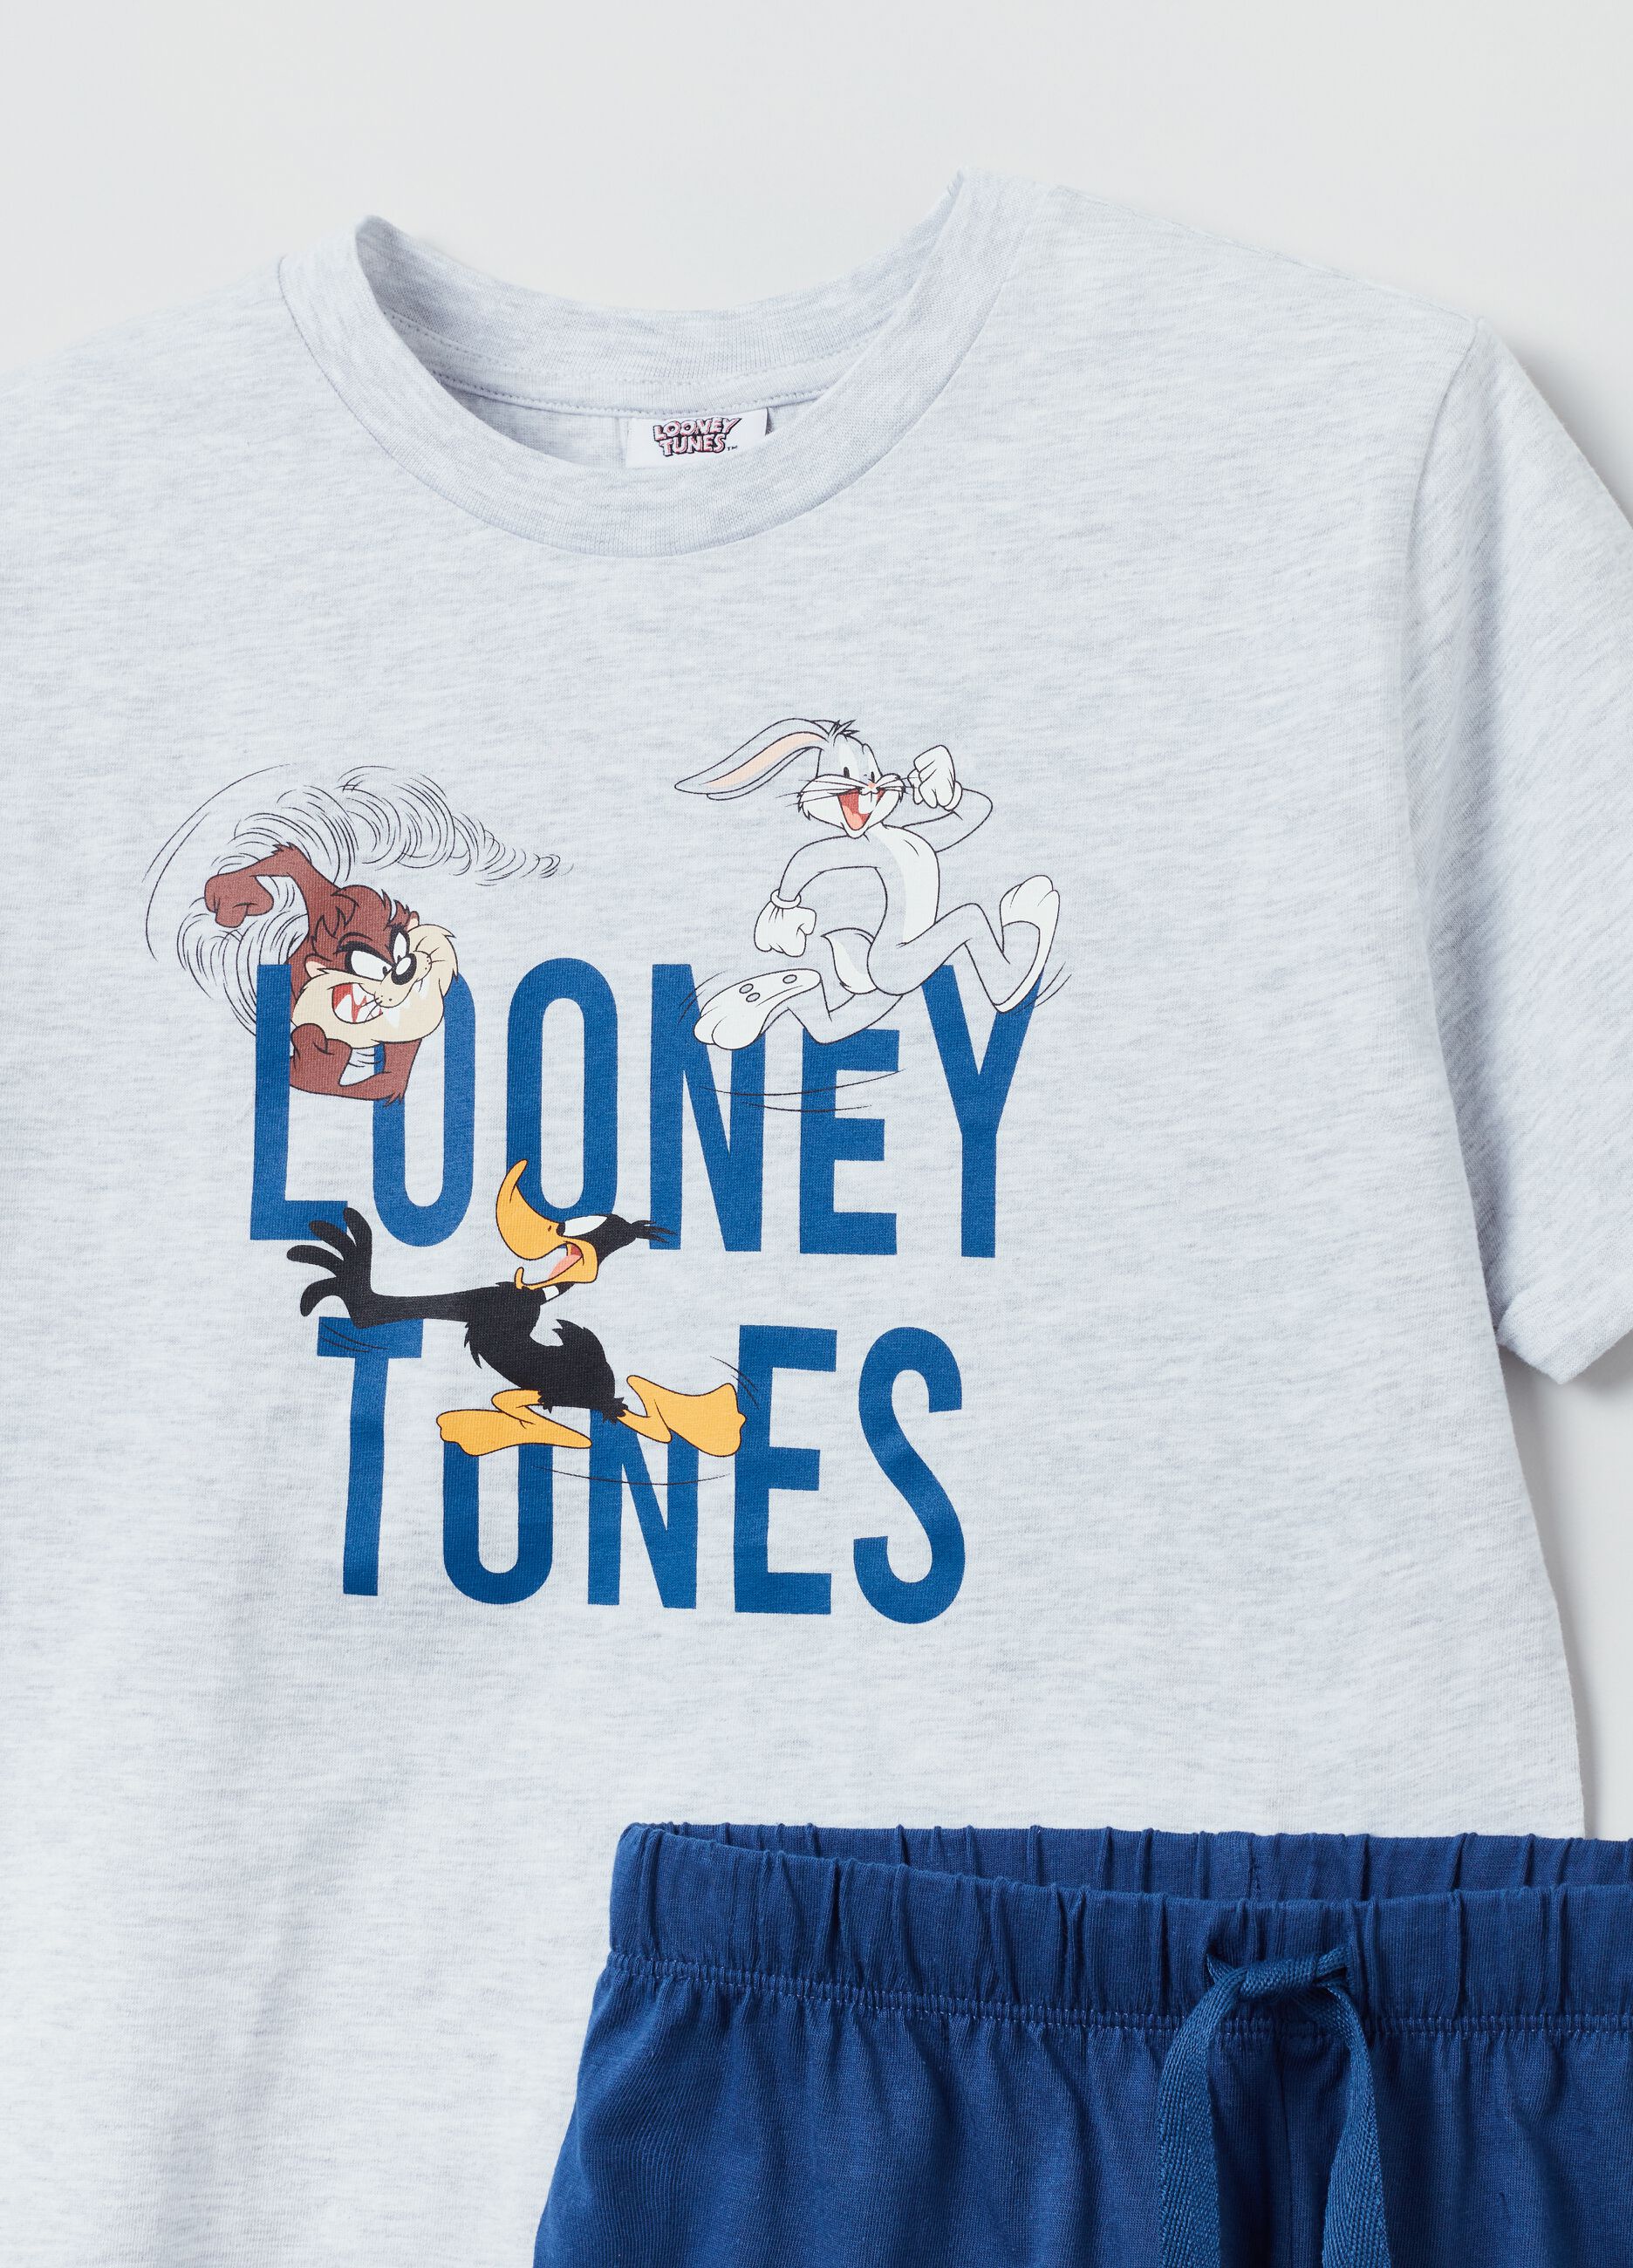 Short pyjamas with Looney Tunes print